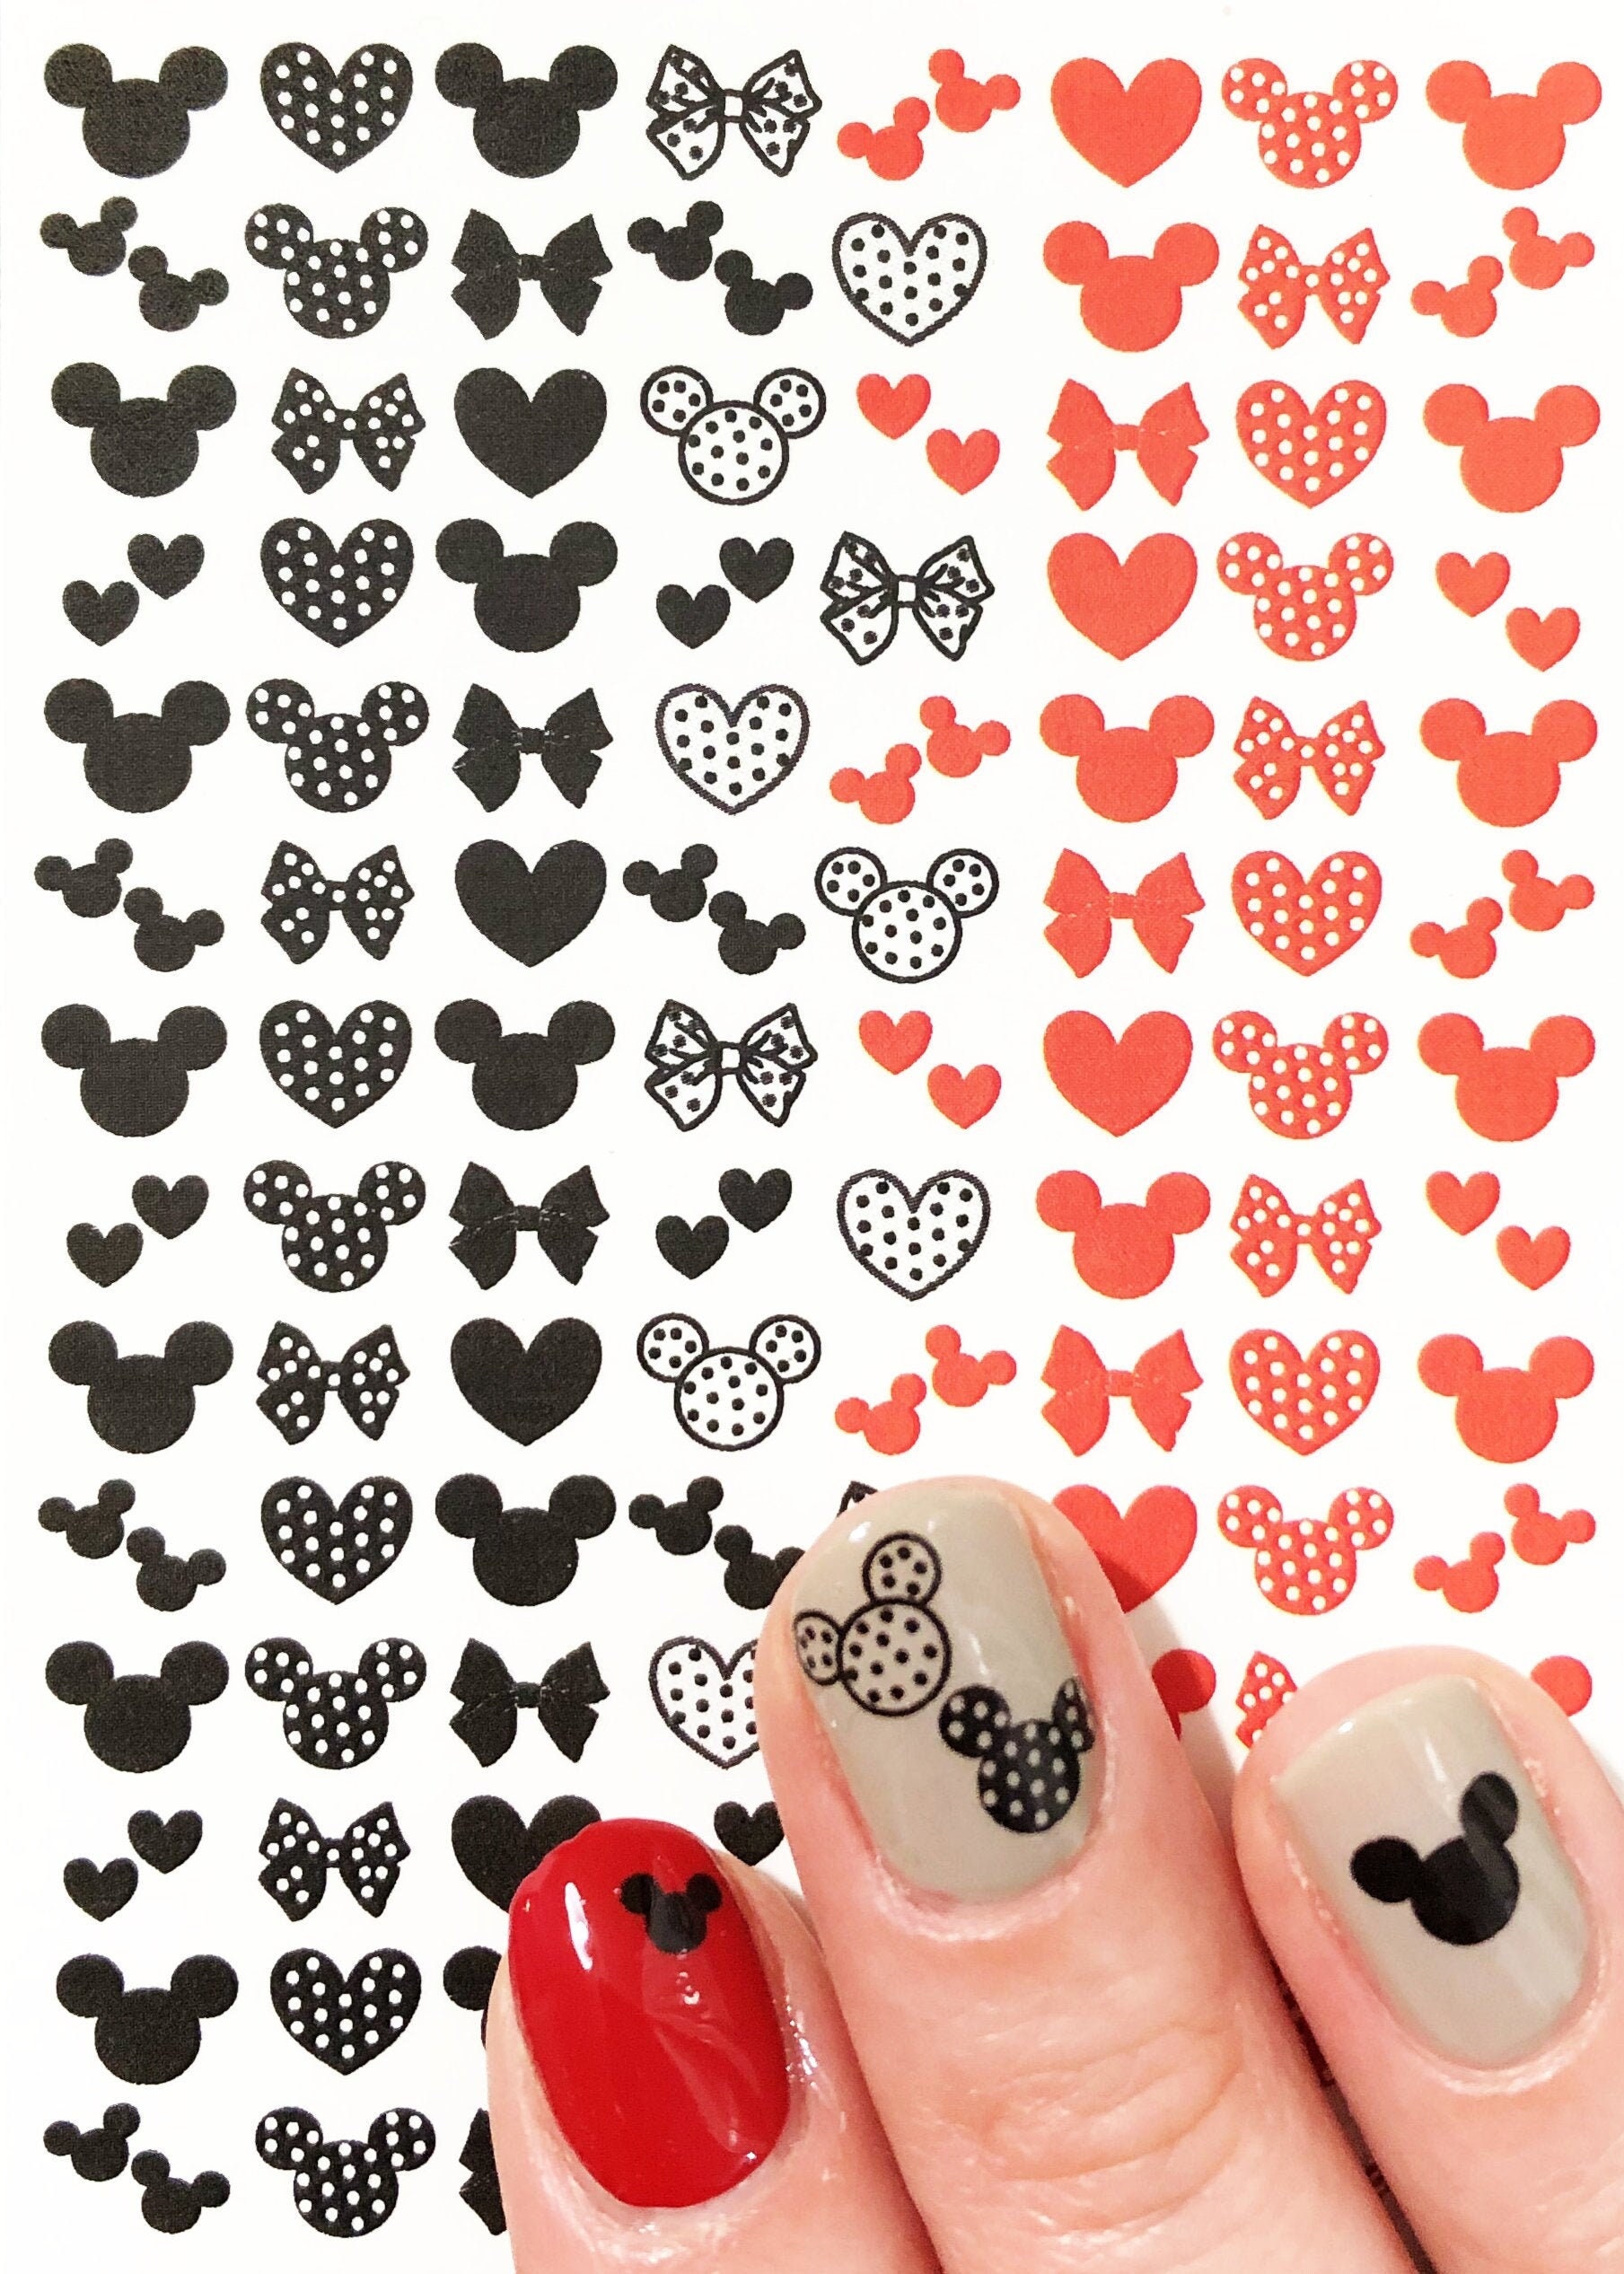 Disney Manicure Monday - Mickey Mouse Polka Dot Nail Art